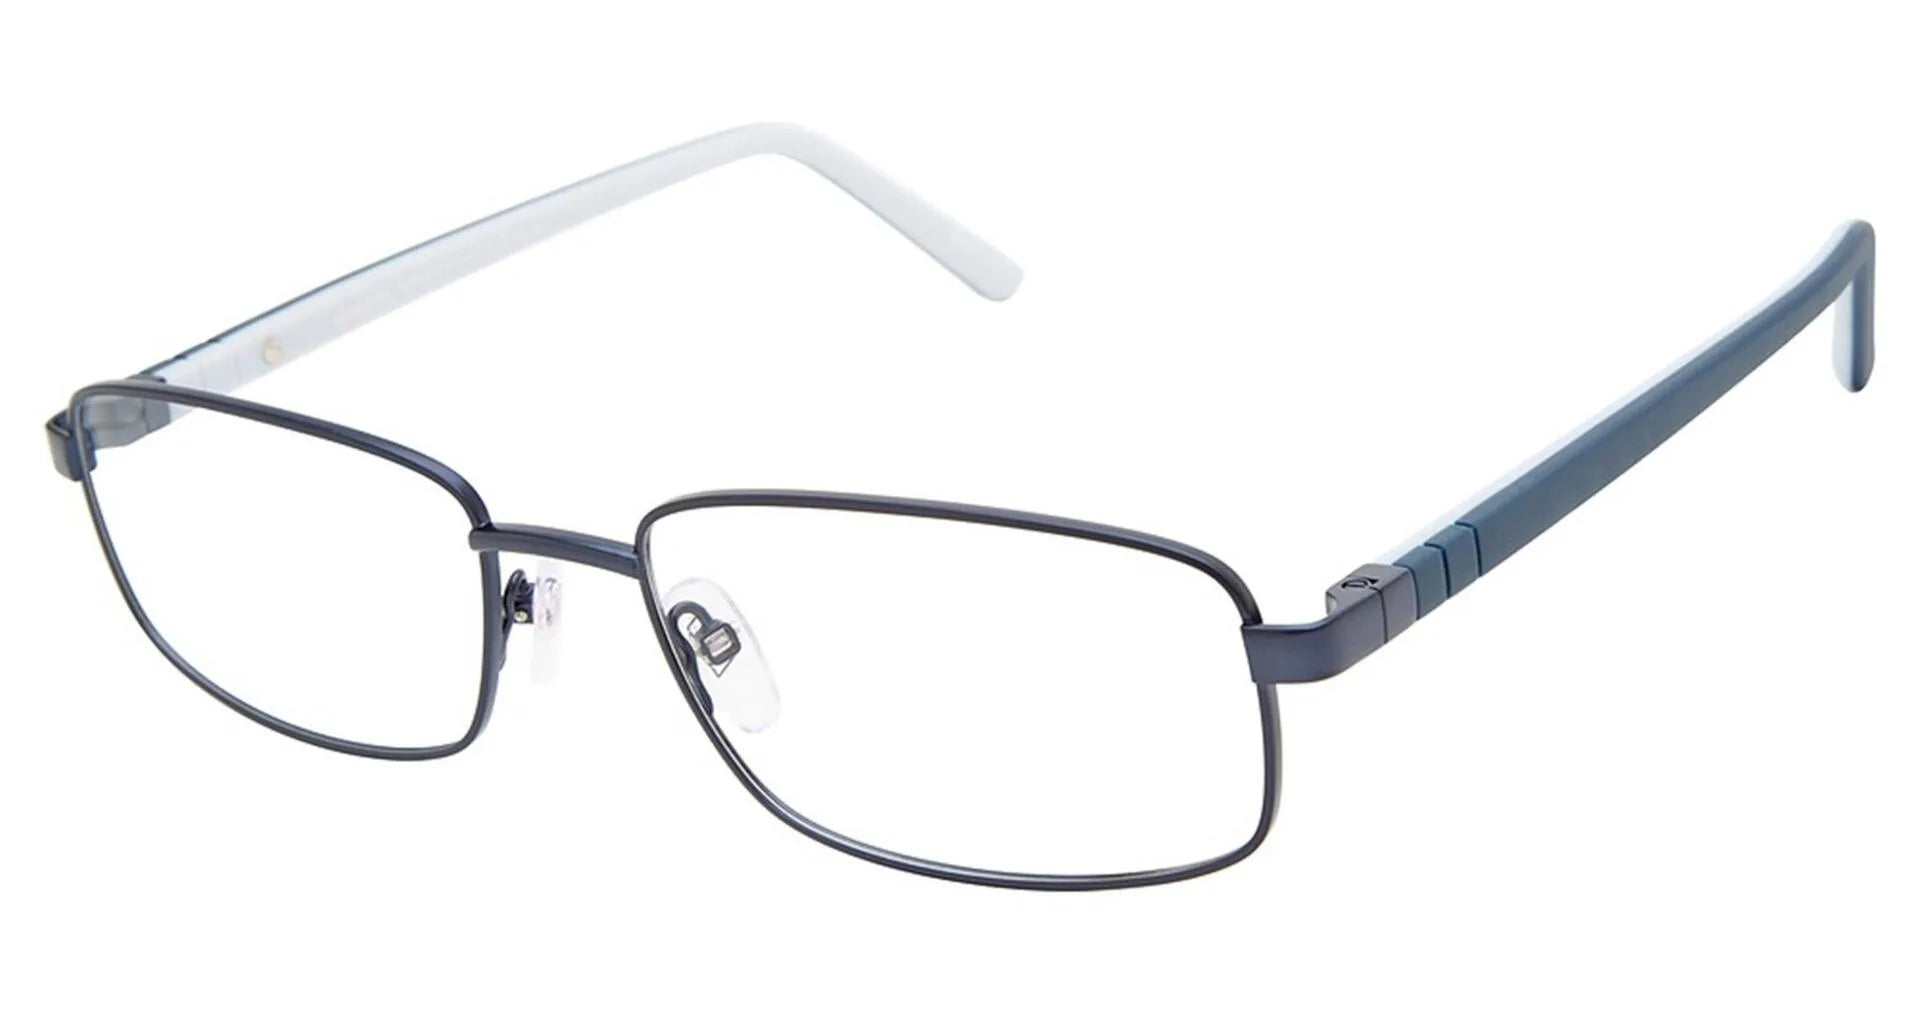 XXL Eyewear Mammoth Eyeglasses Navy